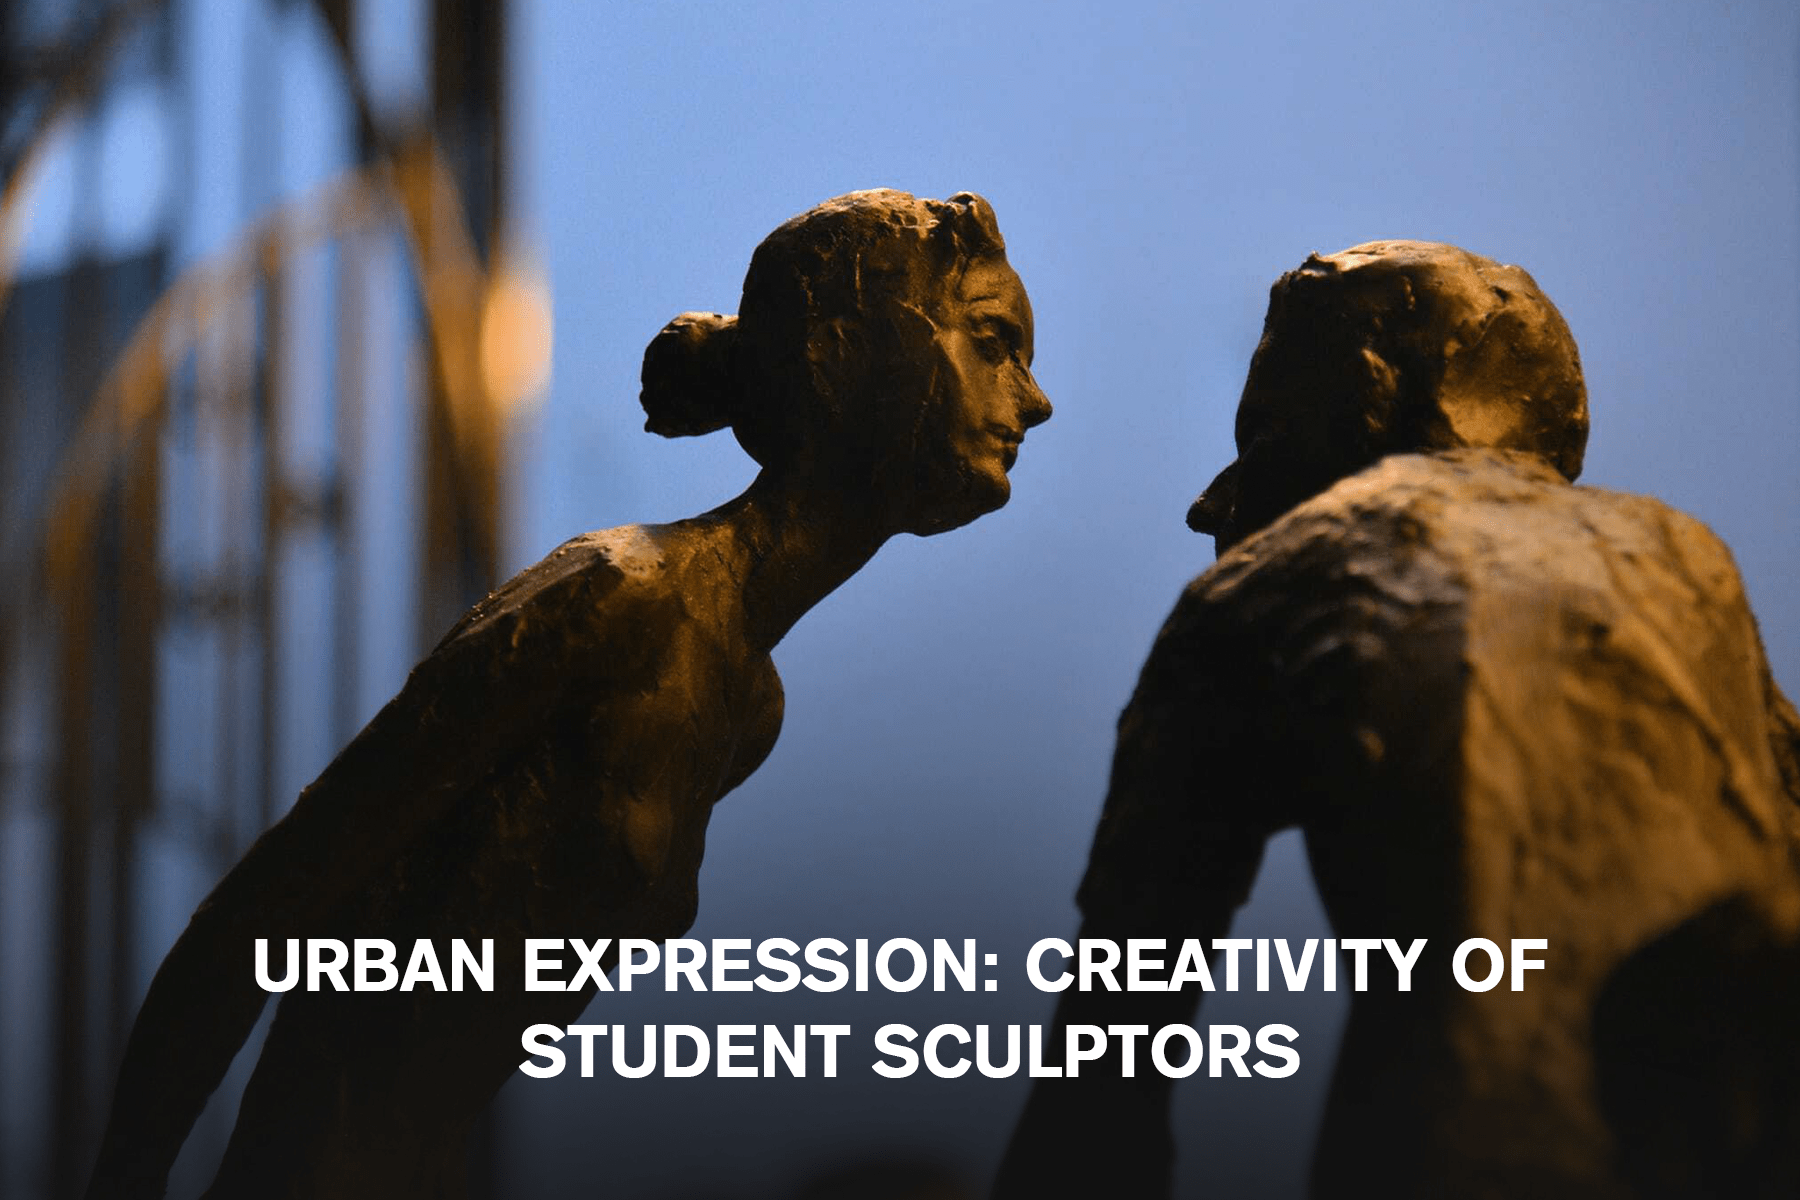 "Urban Expression: Creativity of Student Sculptors"